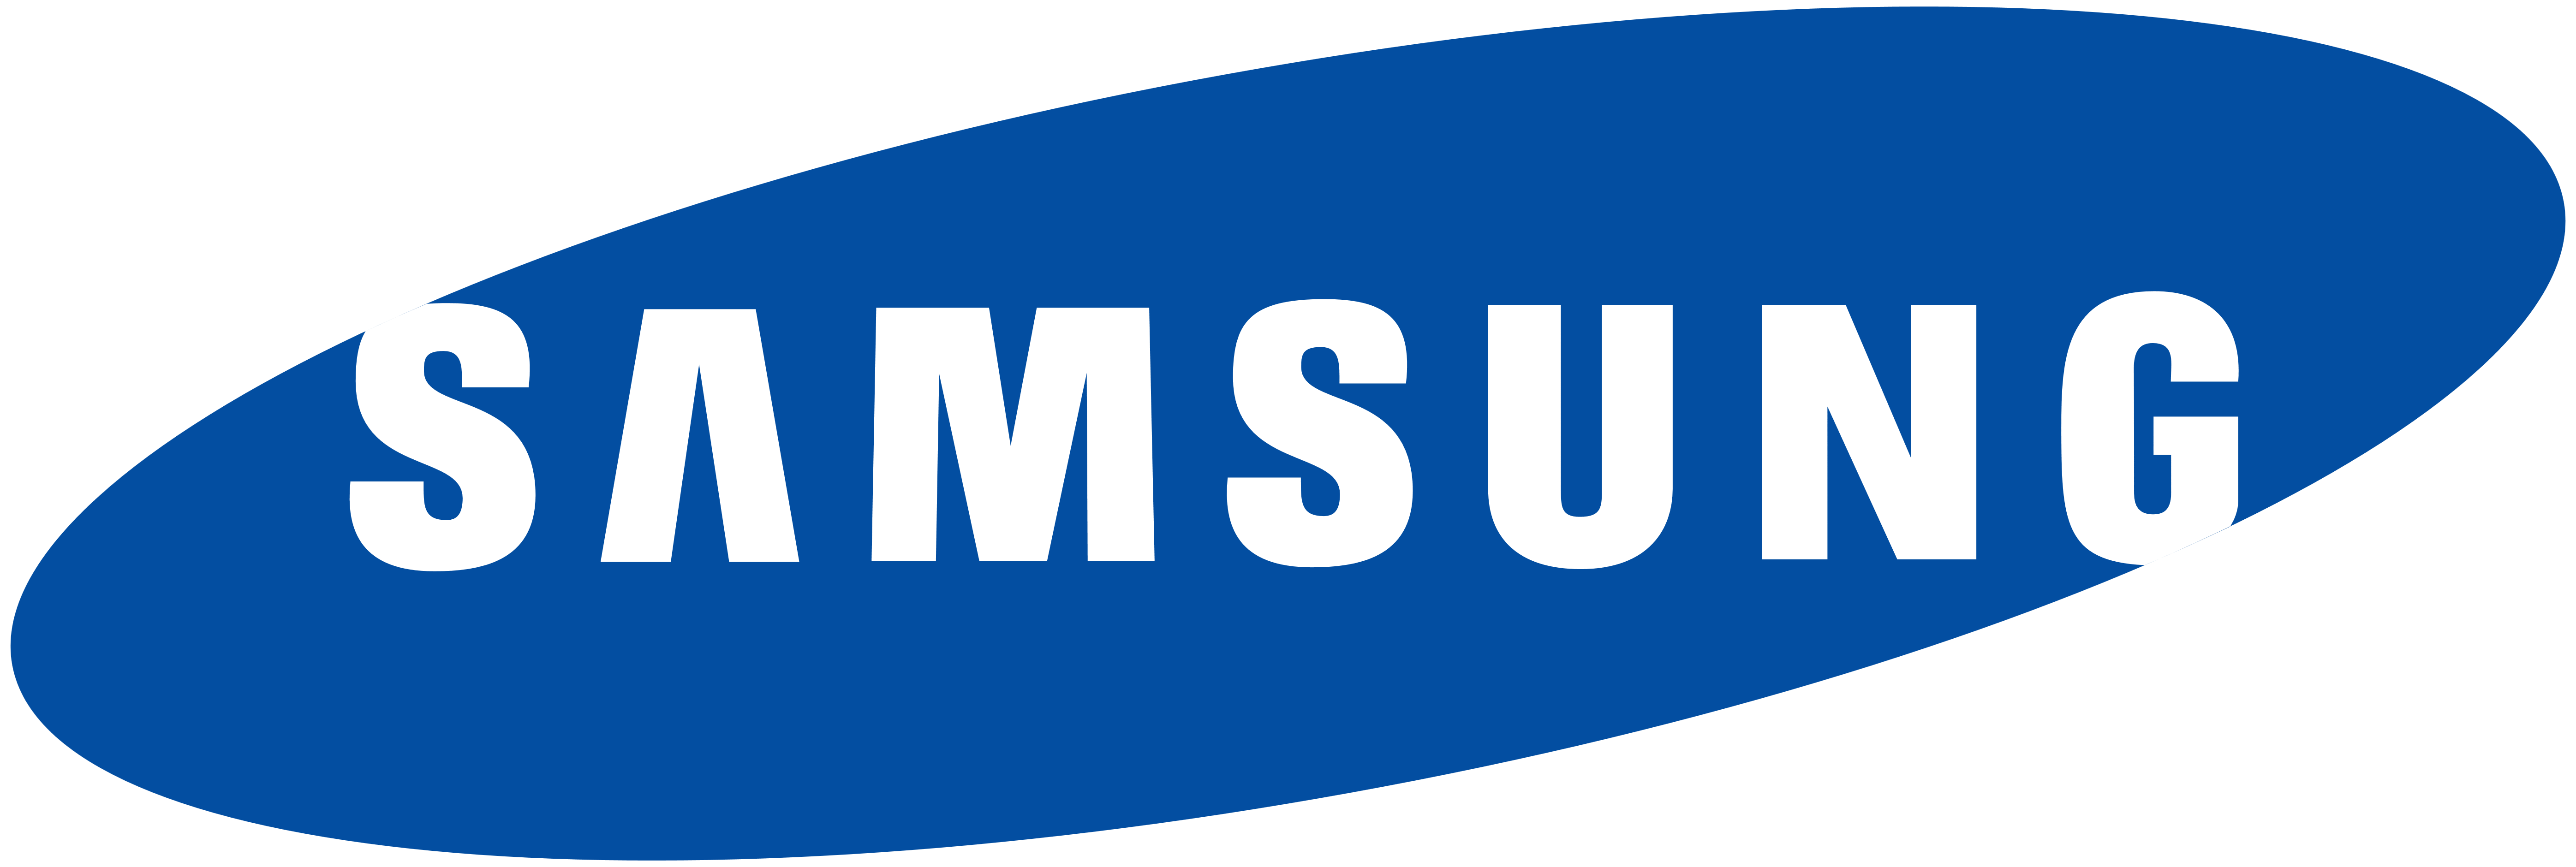 Logo Samsung Png Logo Samsung Png - Blue Origin Vector, Transparent background PNG HD thumbnail